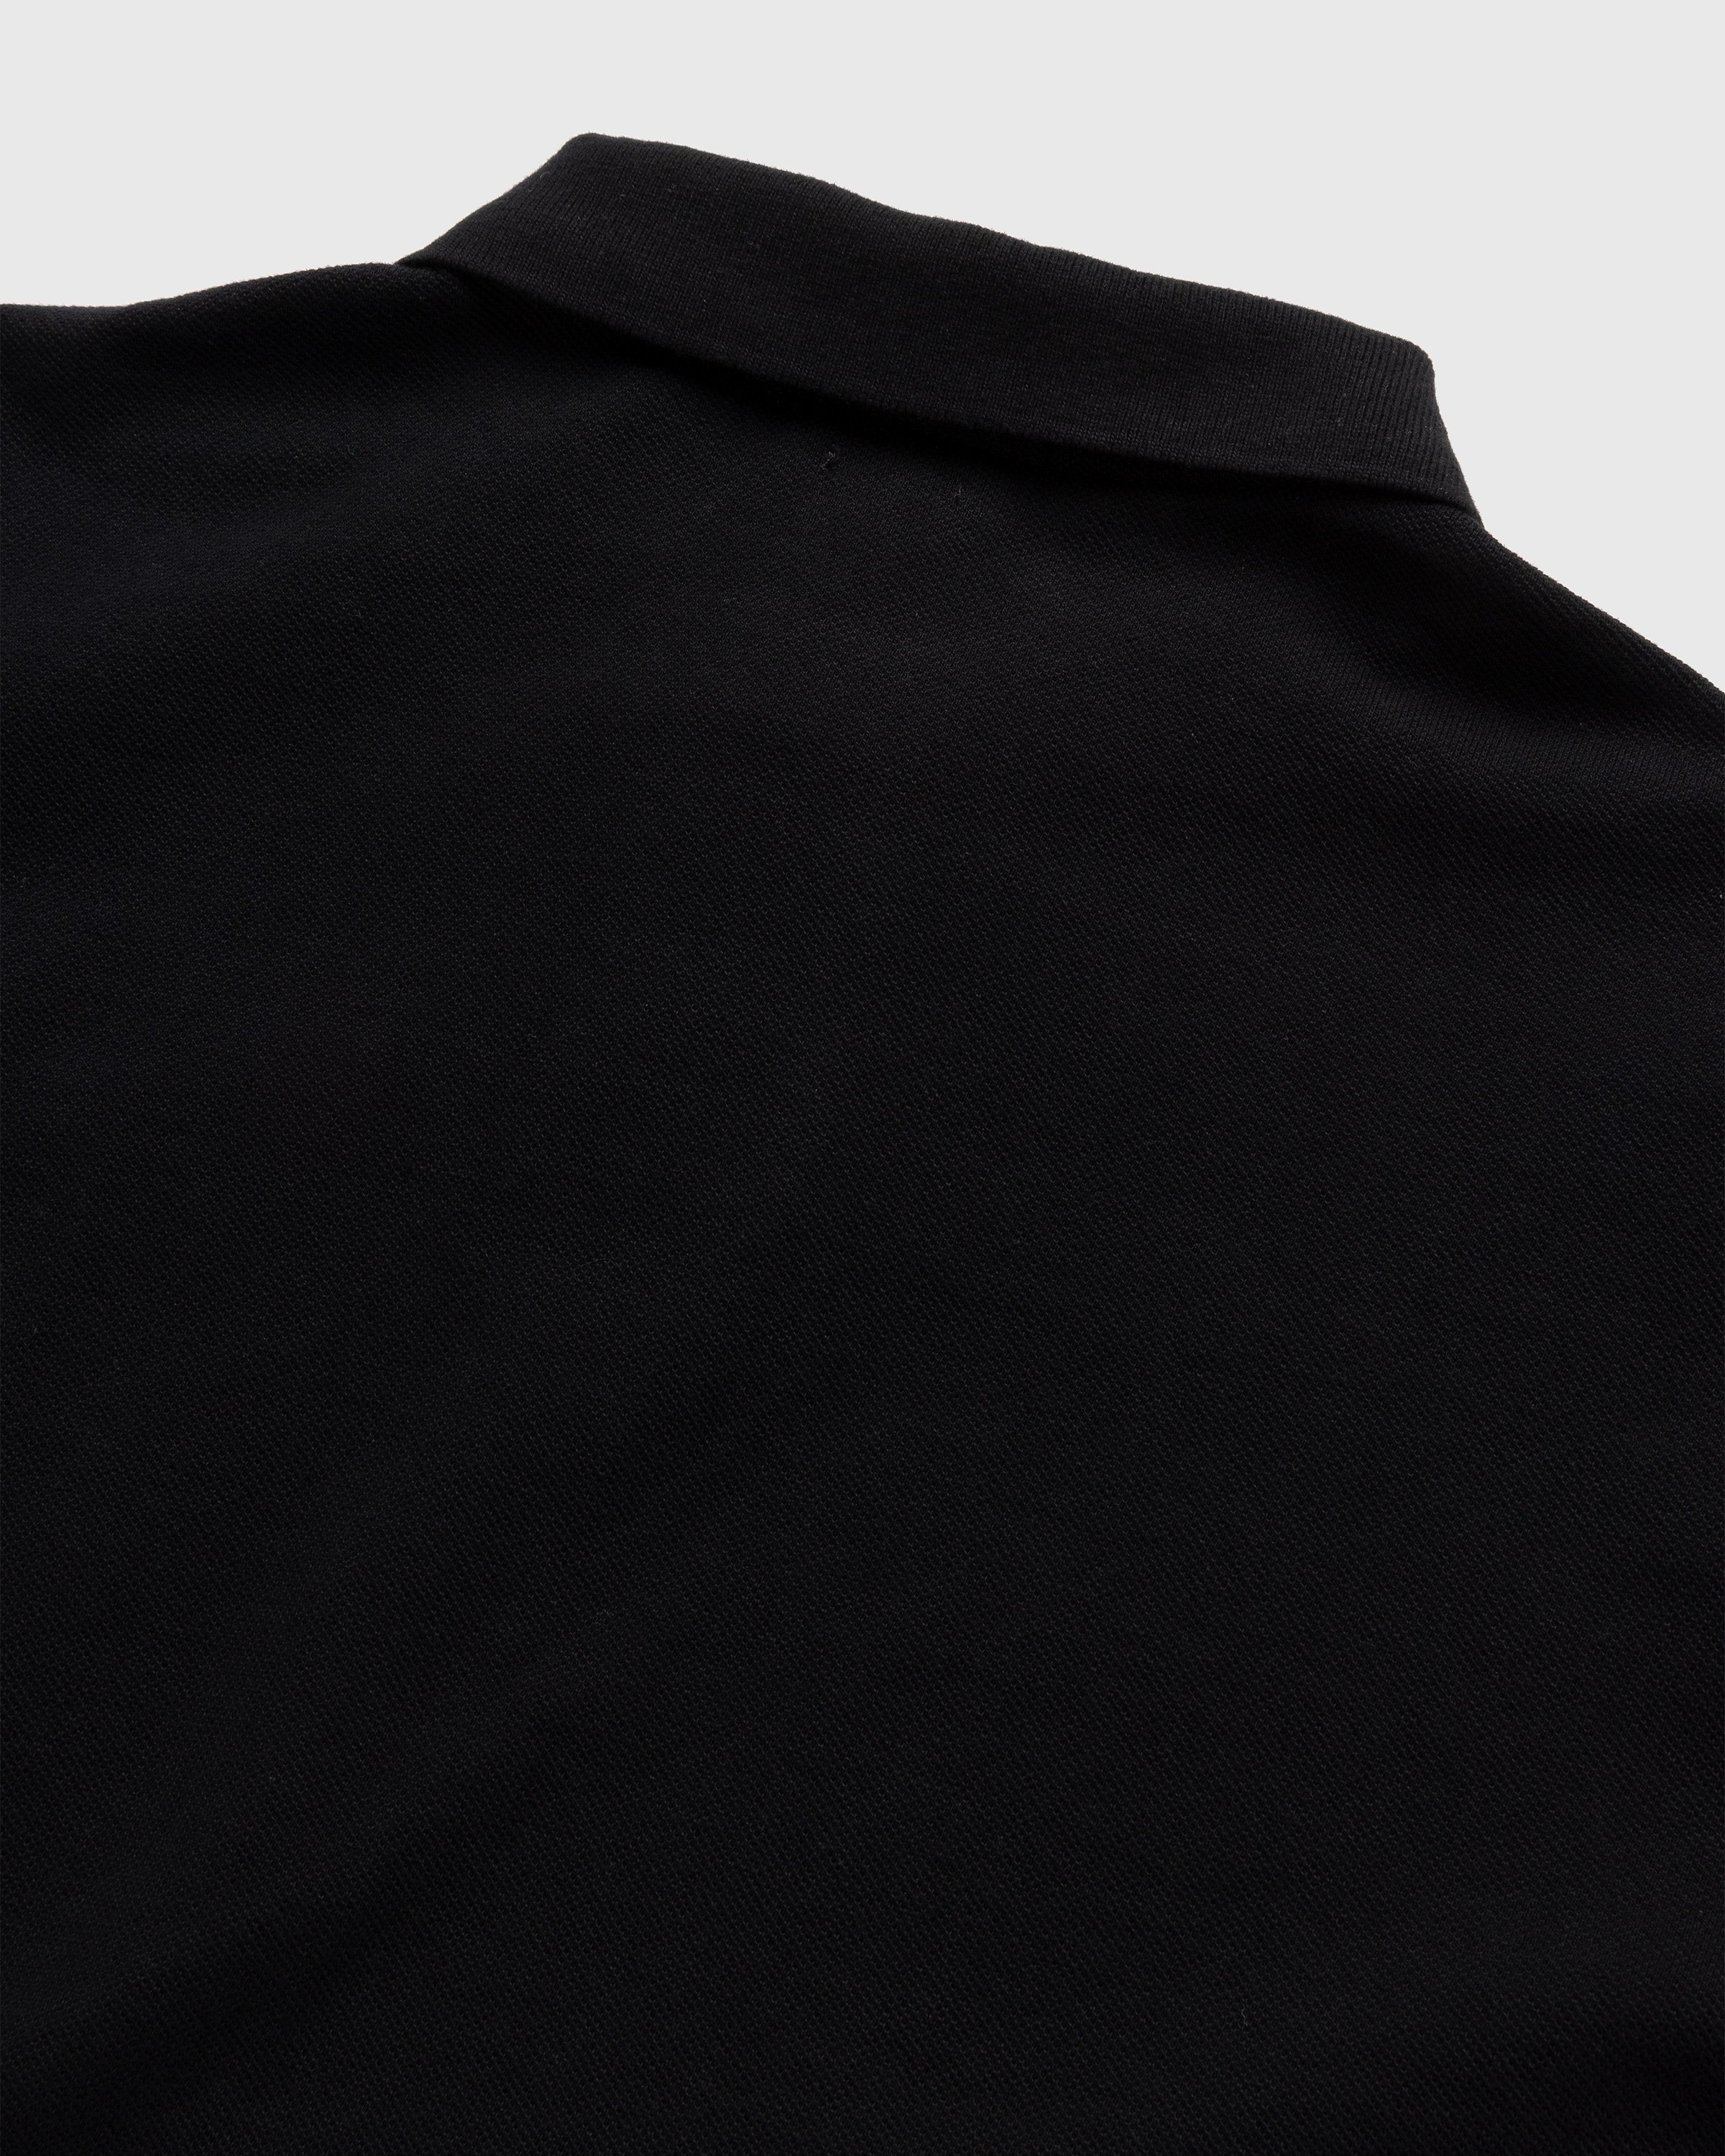 Ralph Lauren x Fortnite - Short Sleeve Polo Shirt Black - Clothing - Black - Image 5